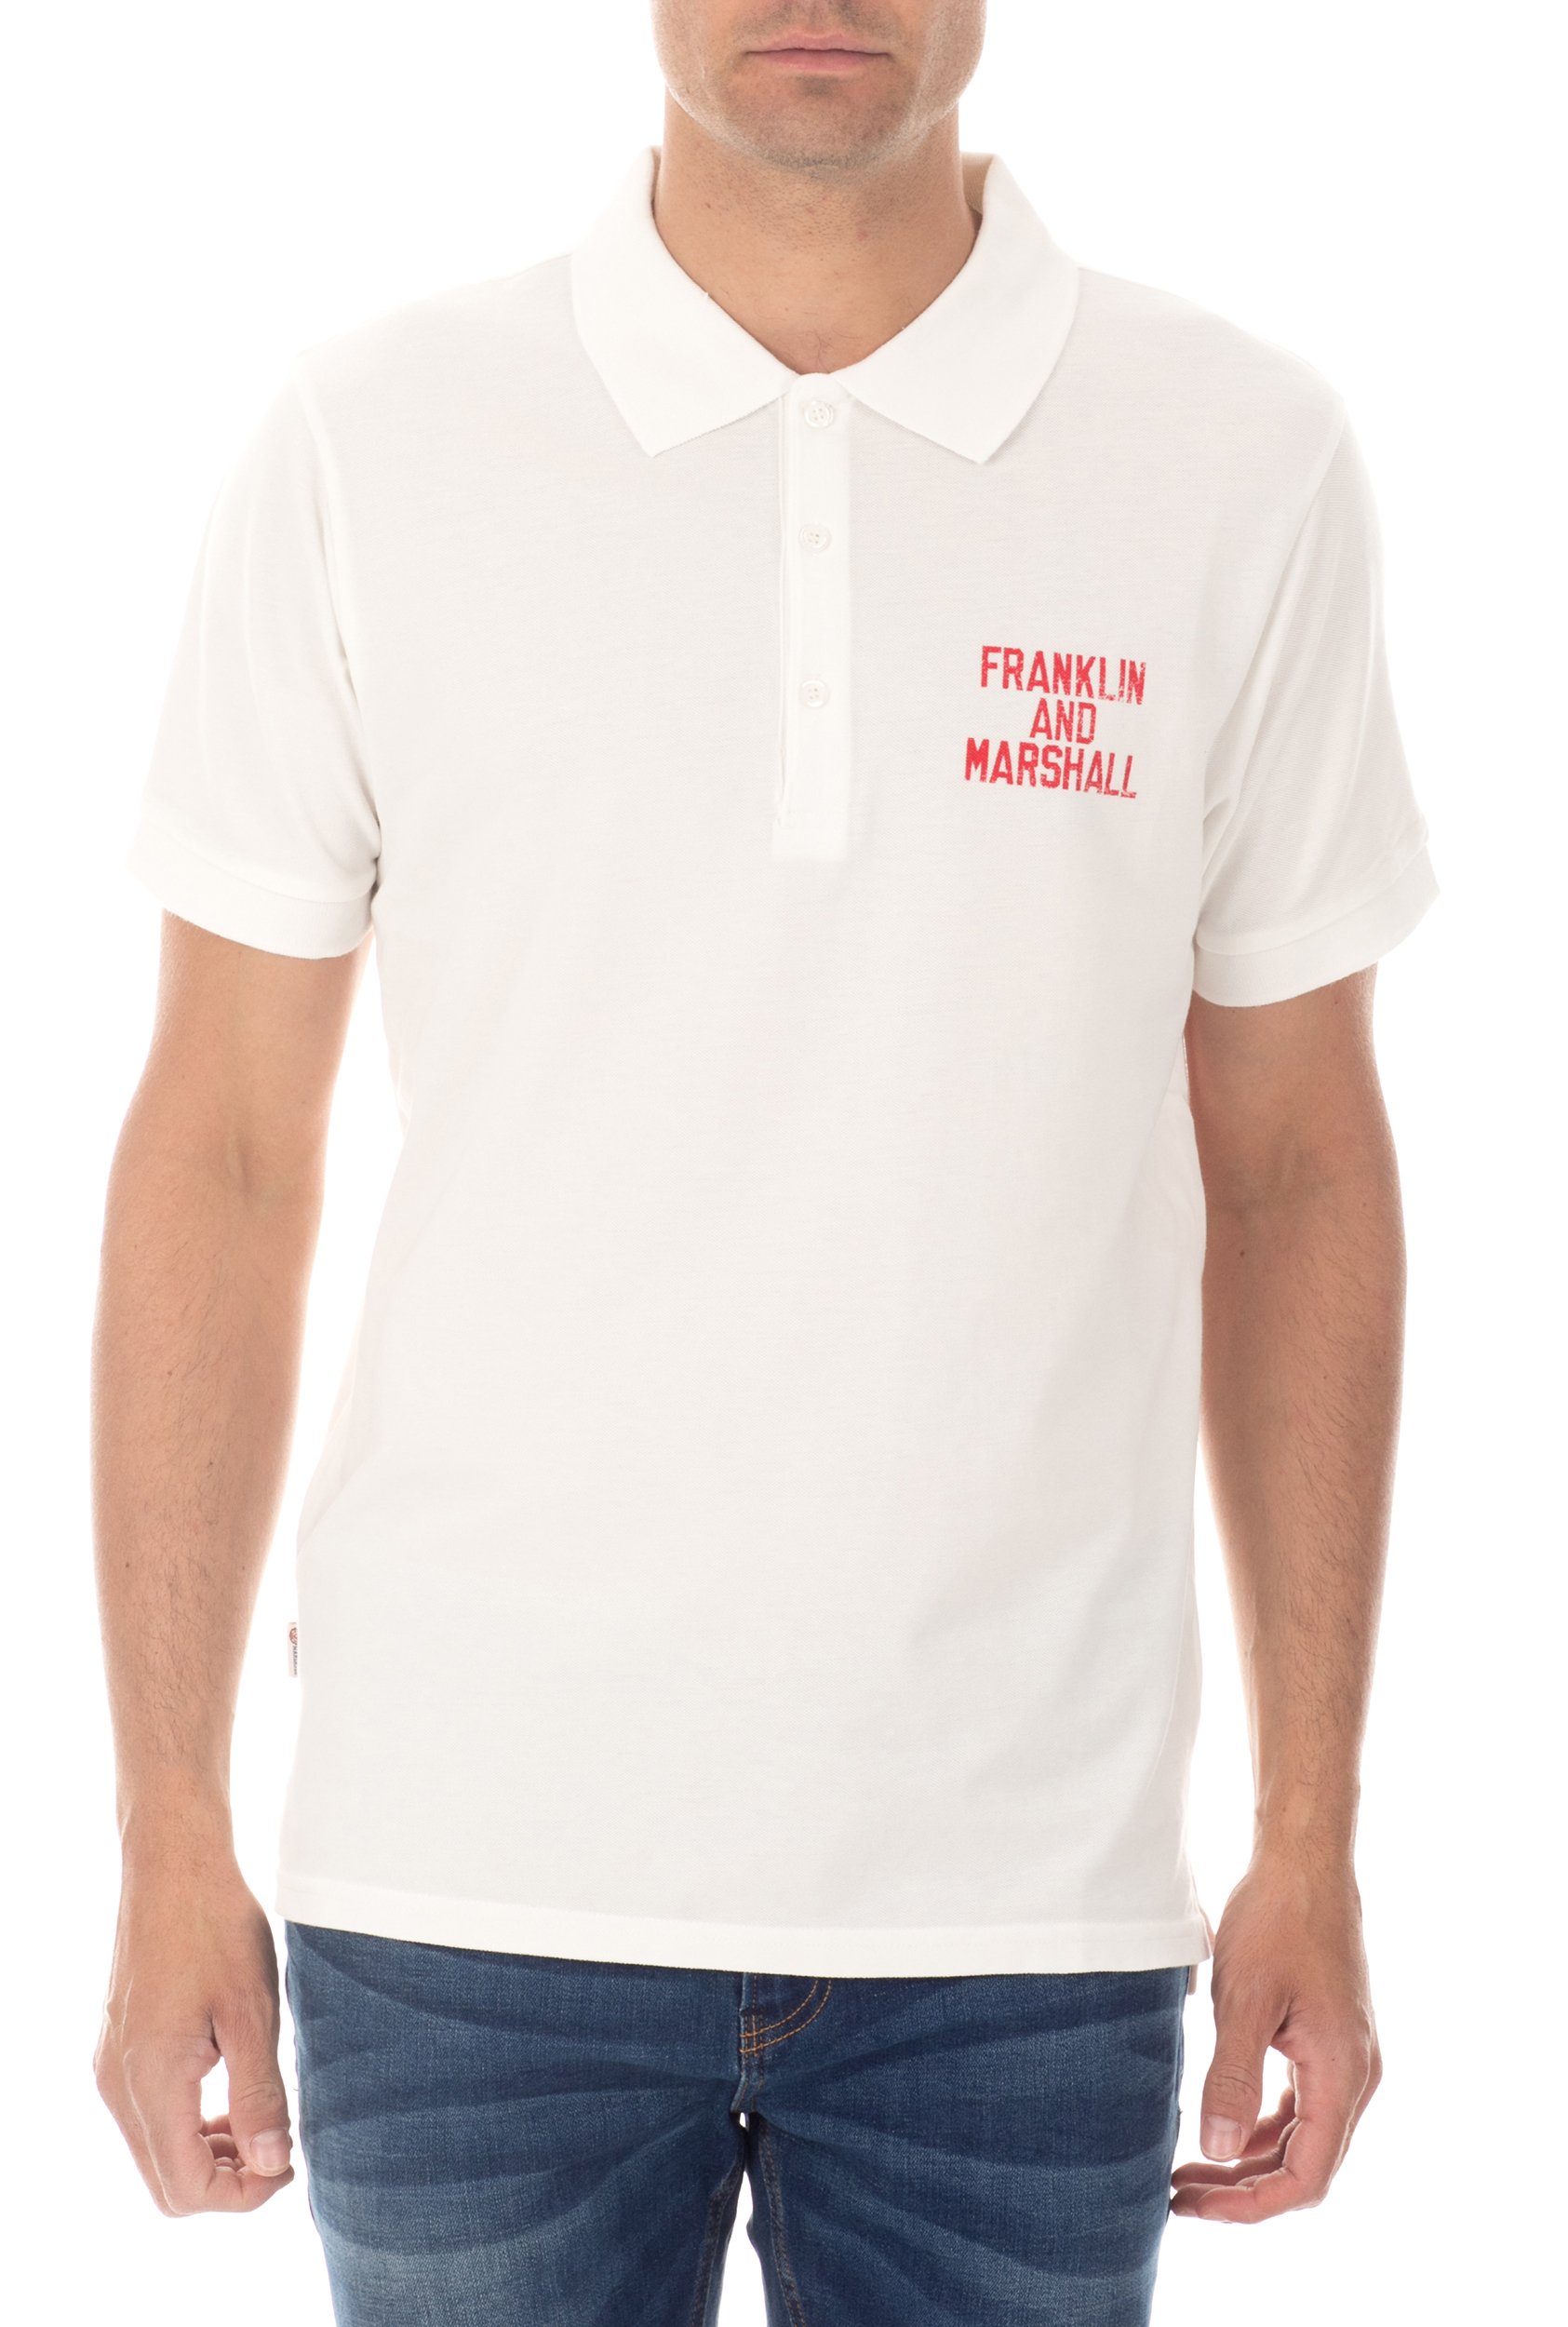 FRANKLIN & MARSHALL FRANKLIN & MARSHALL - Ανδρική κοντομάνικη μπλούζα polo FRANKLIN & MARSHALL λευκή